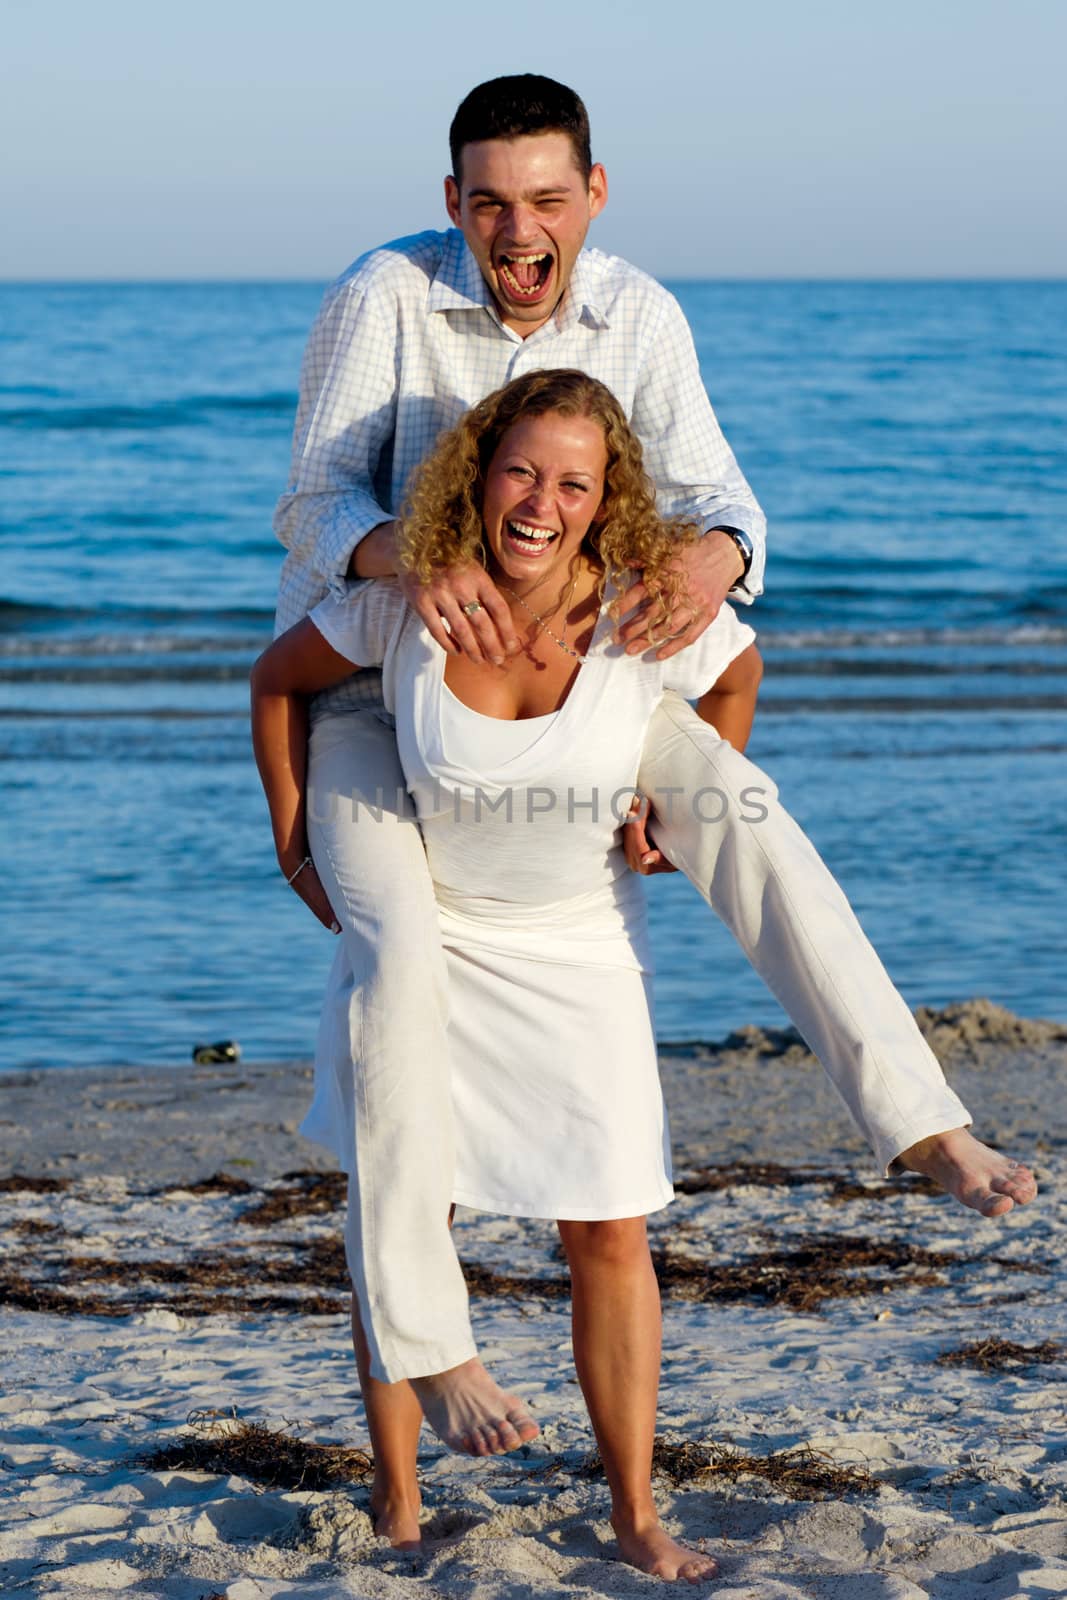 A happy woman and man having fun on beach. 